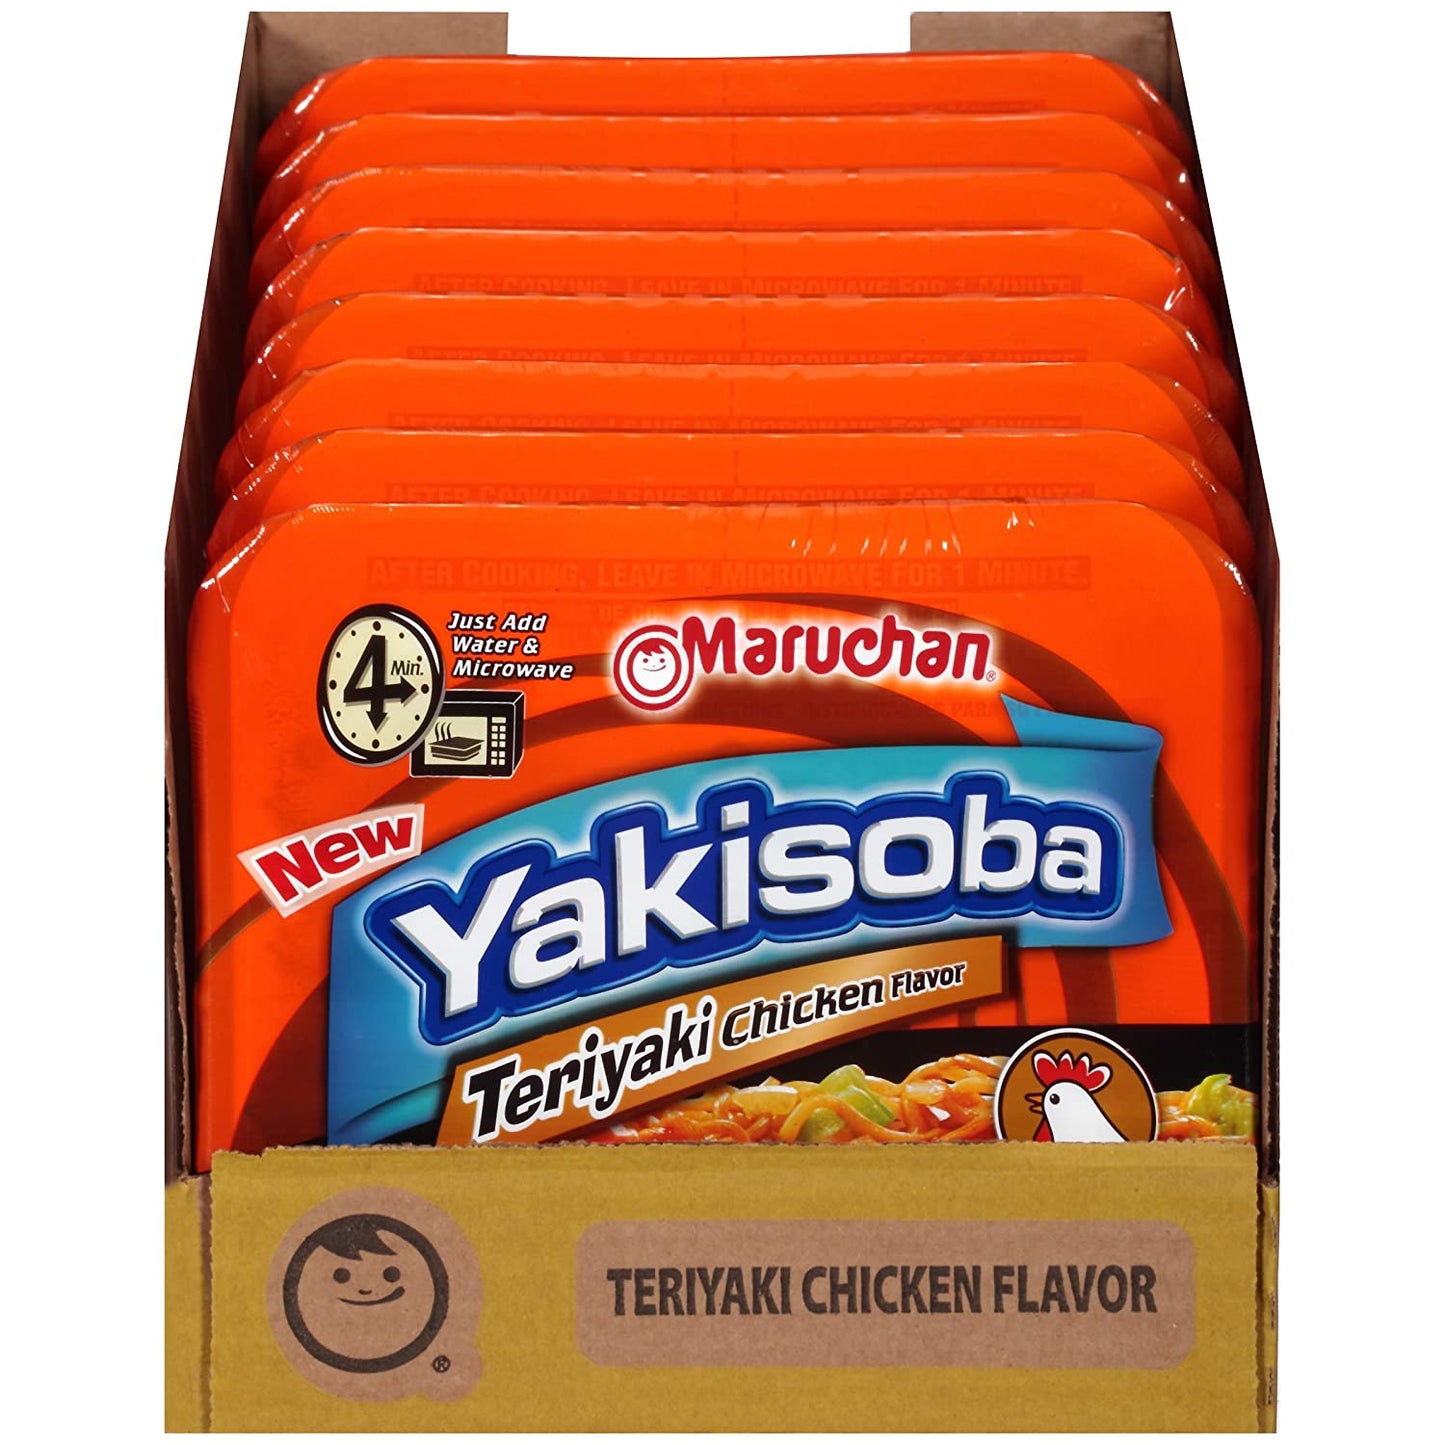 Maruchan Yakisoba Teriyaki Chicken, 3.98 Oz, Pack of 8